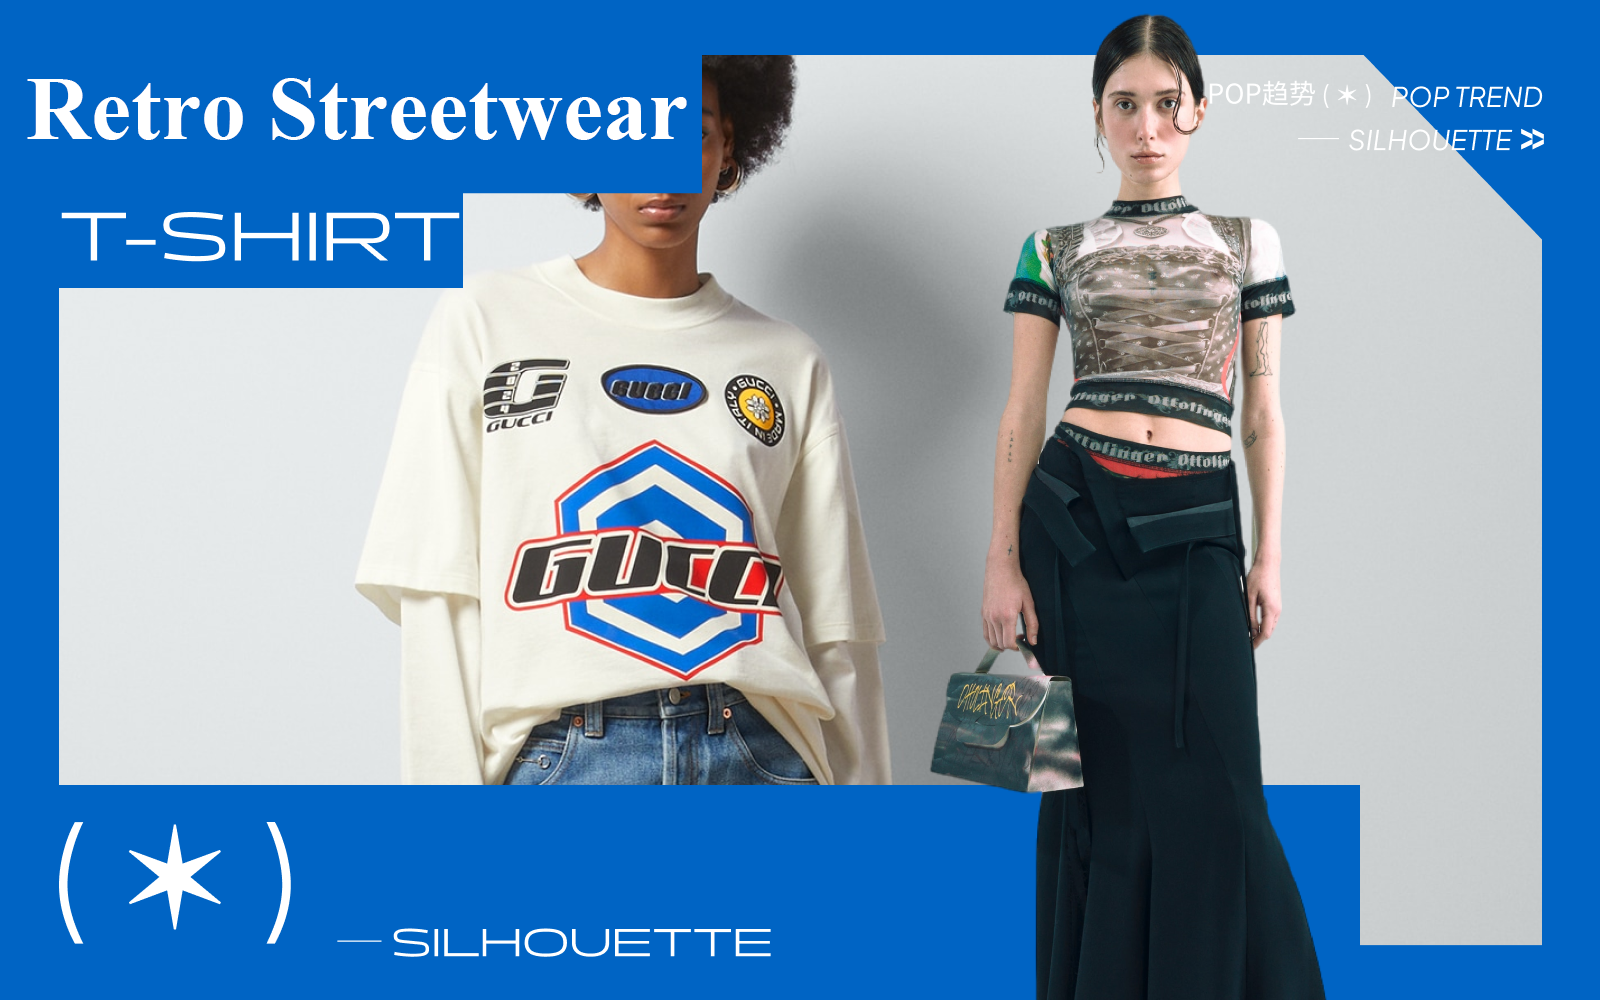 Retro Streetwear -- The Silhouette Trend for Women's T-shirt